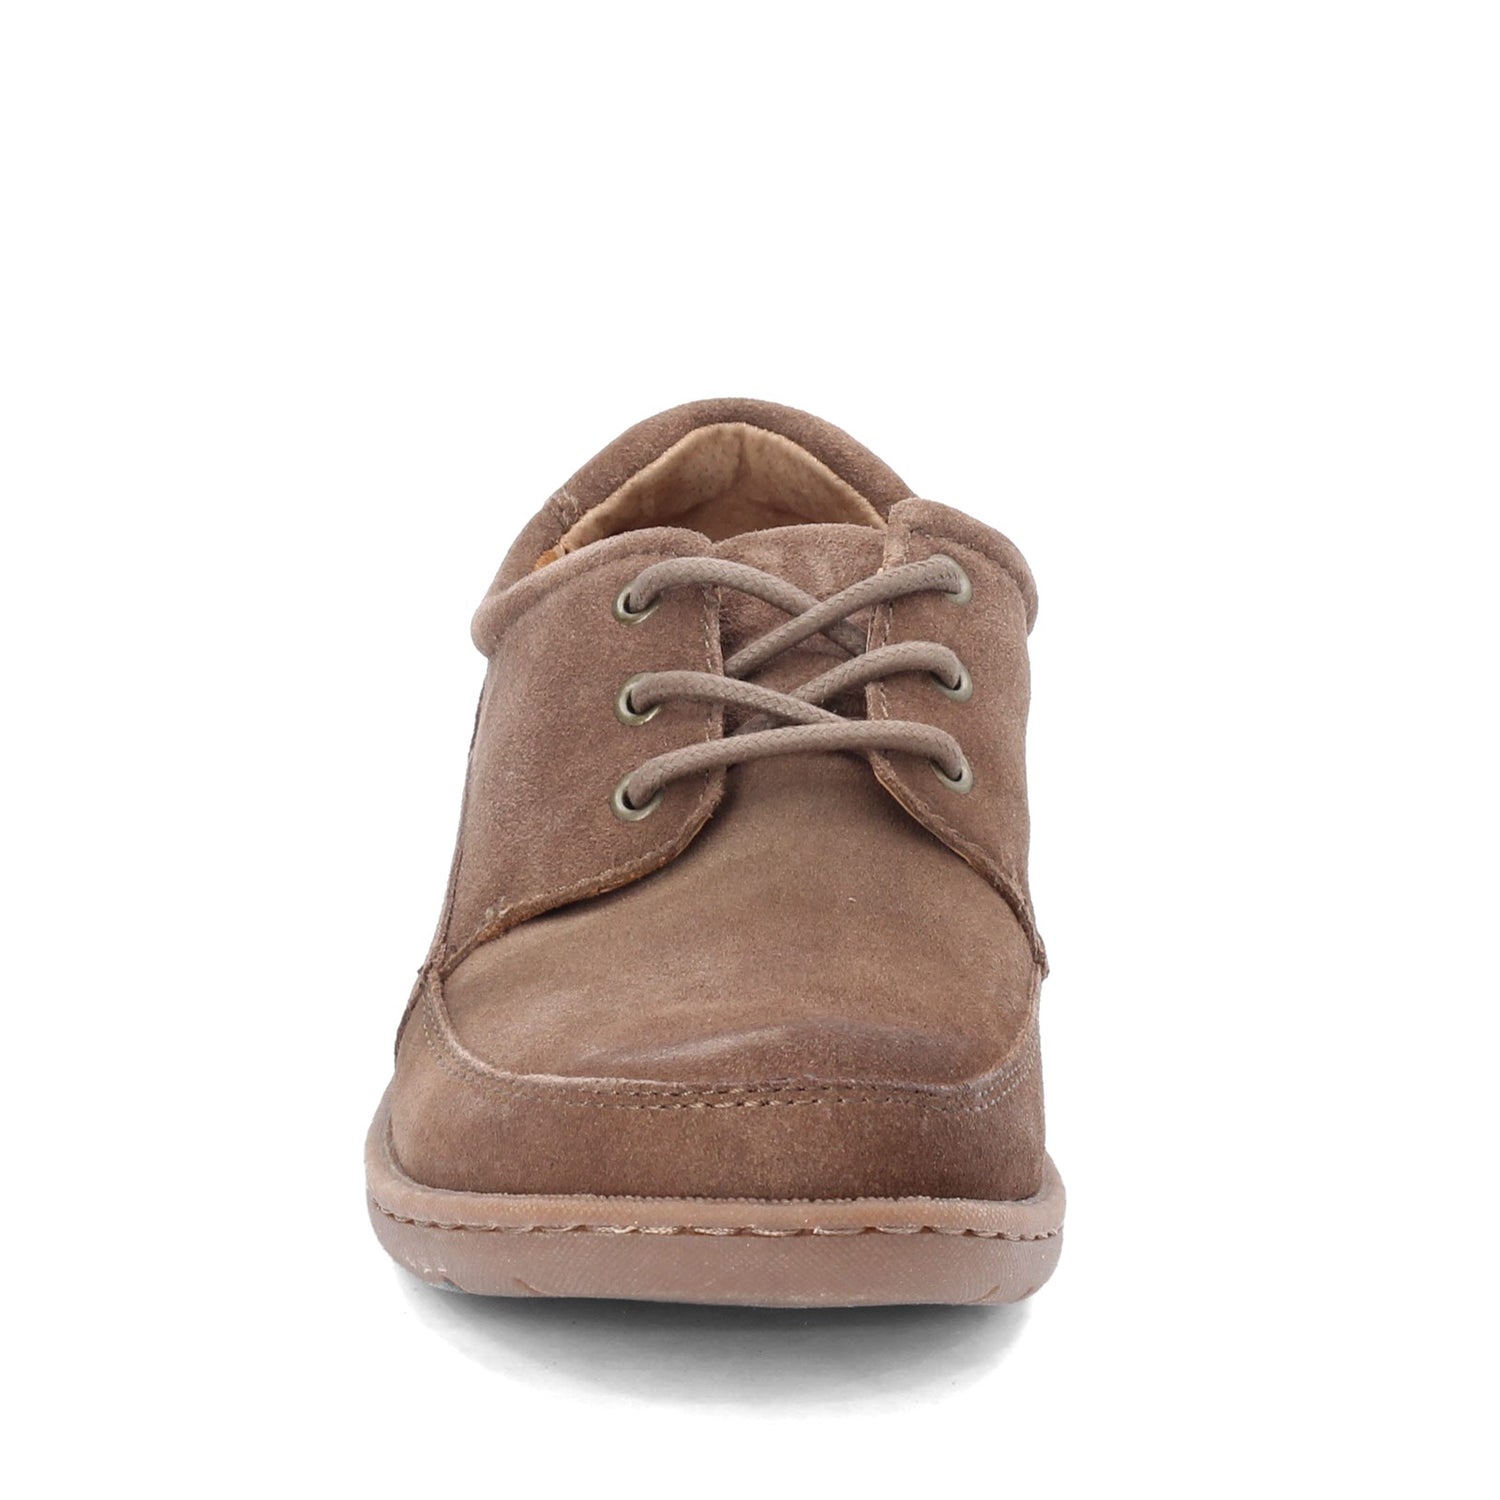 Peltz Shoes  Men's b.o.c Gustaf Oxford TAN SUEDE A06117